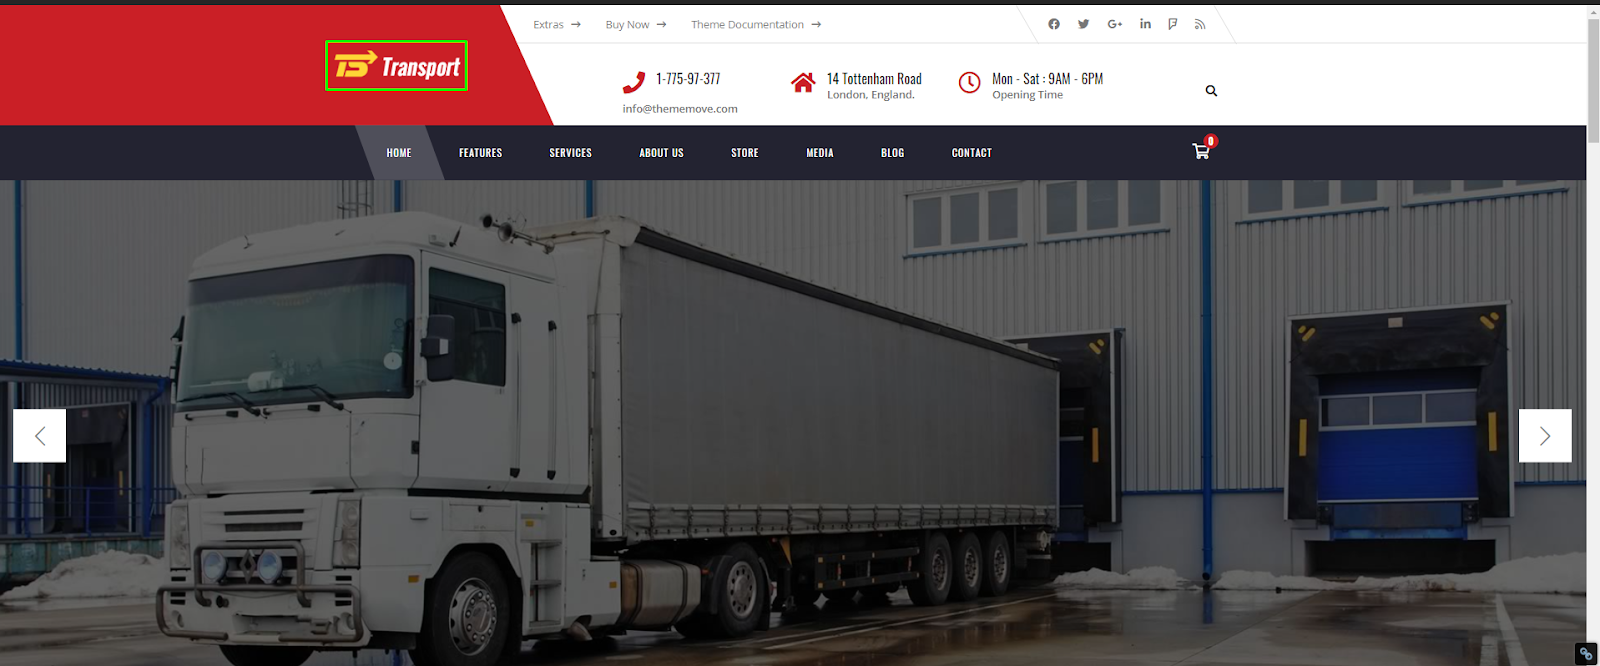 Transport - Logistics and Warehouse WordPress theme